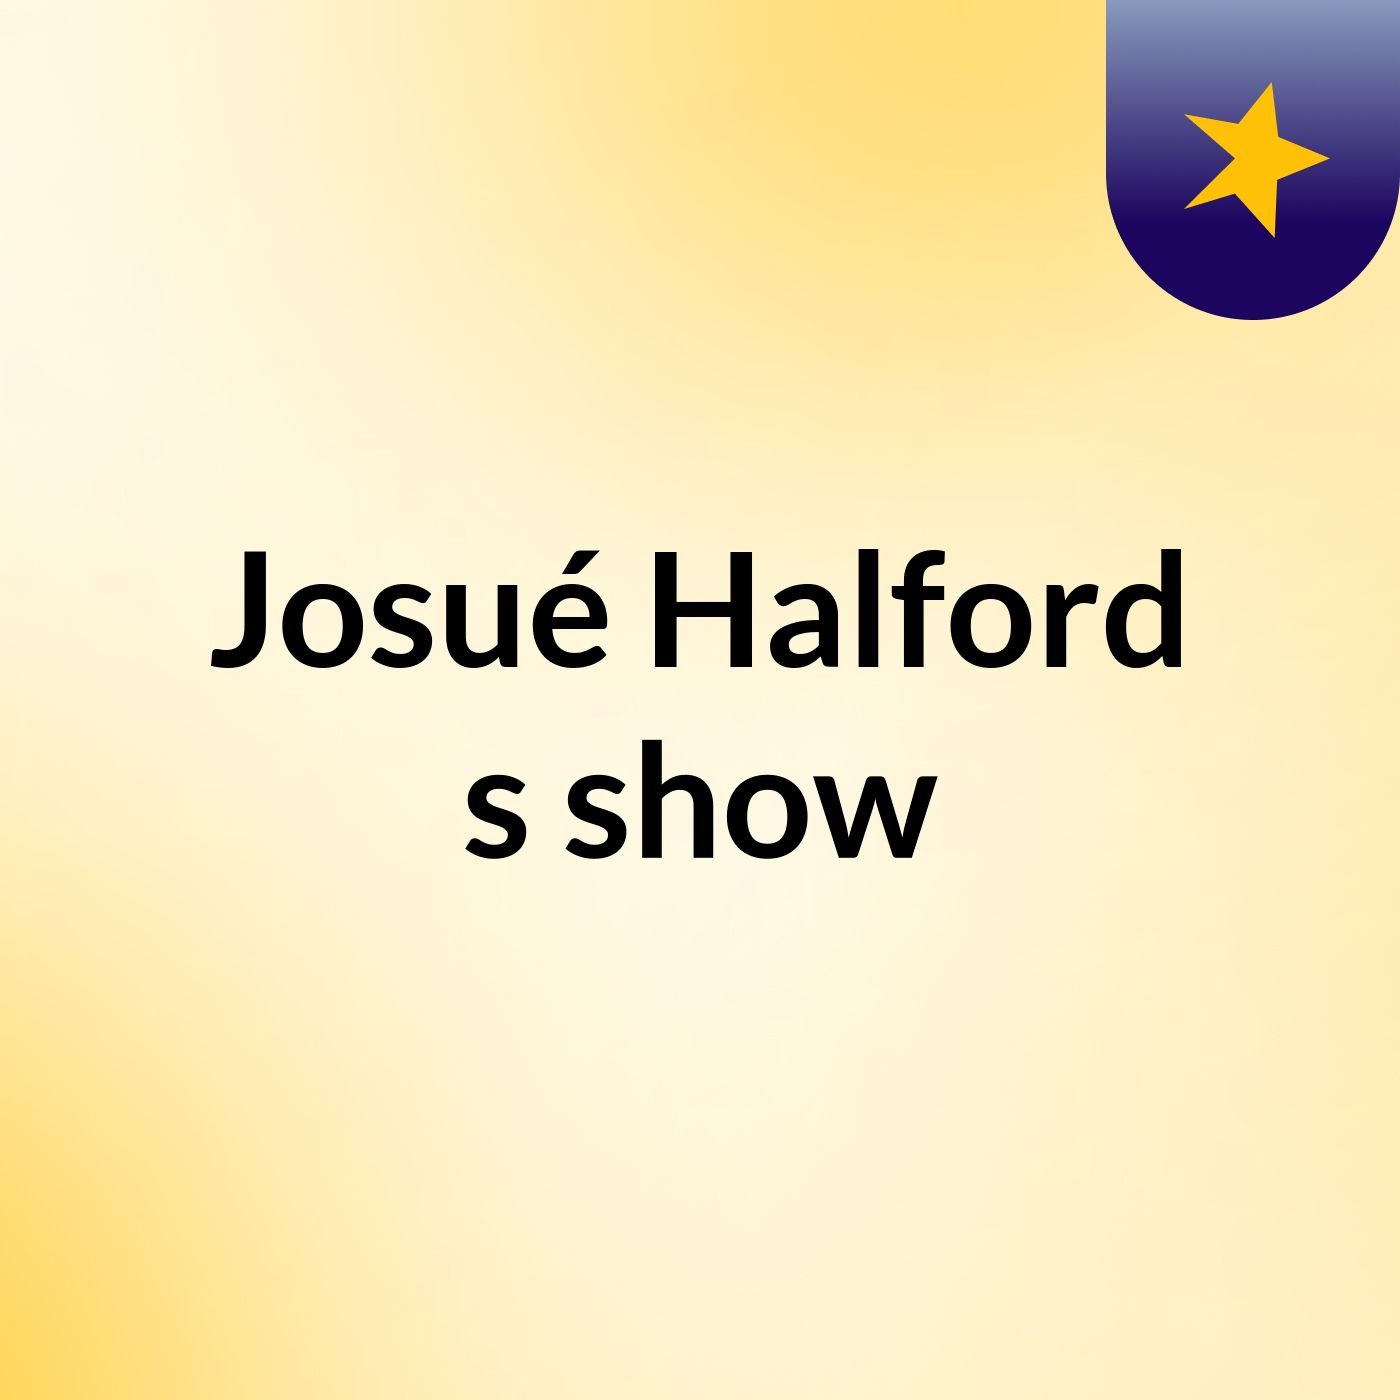 Josué Halford's show